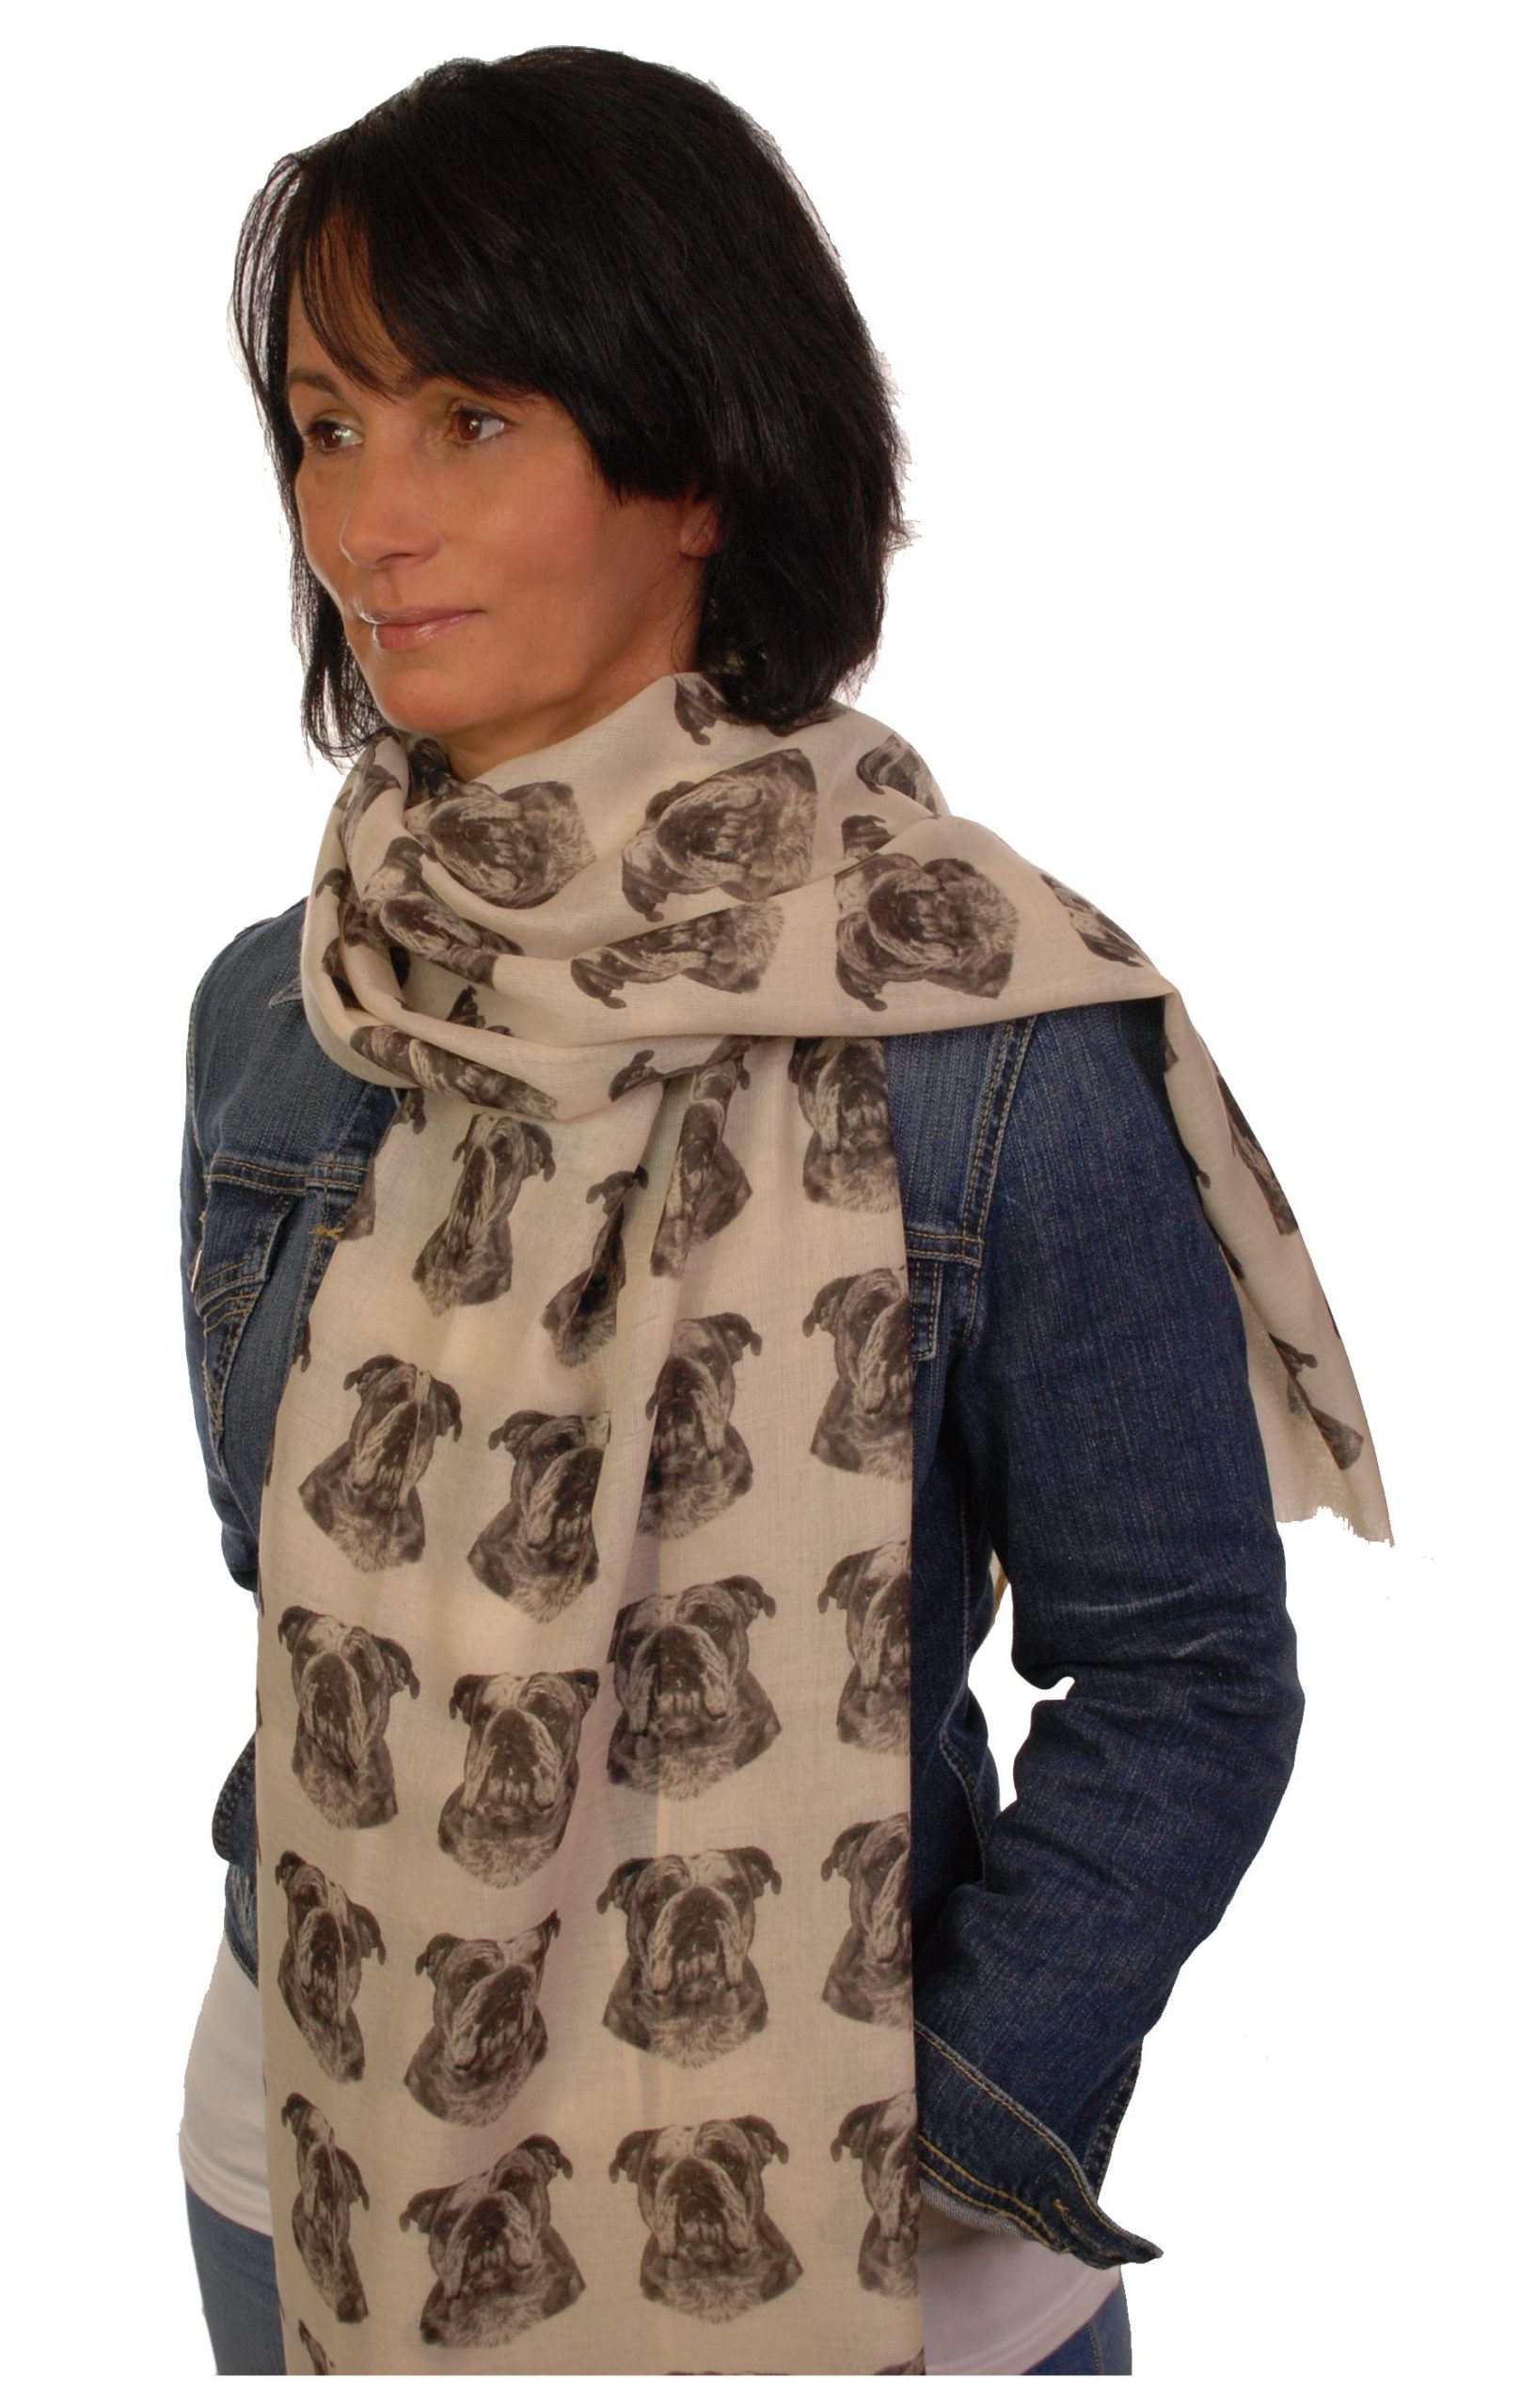 Mike Sibley English Bulldog licensed design ladies fashion scarf